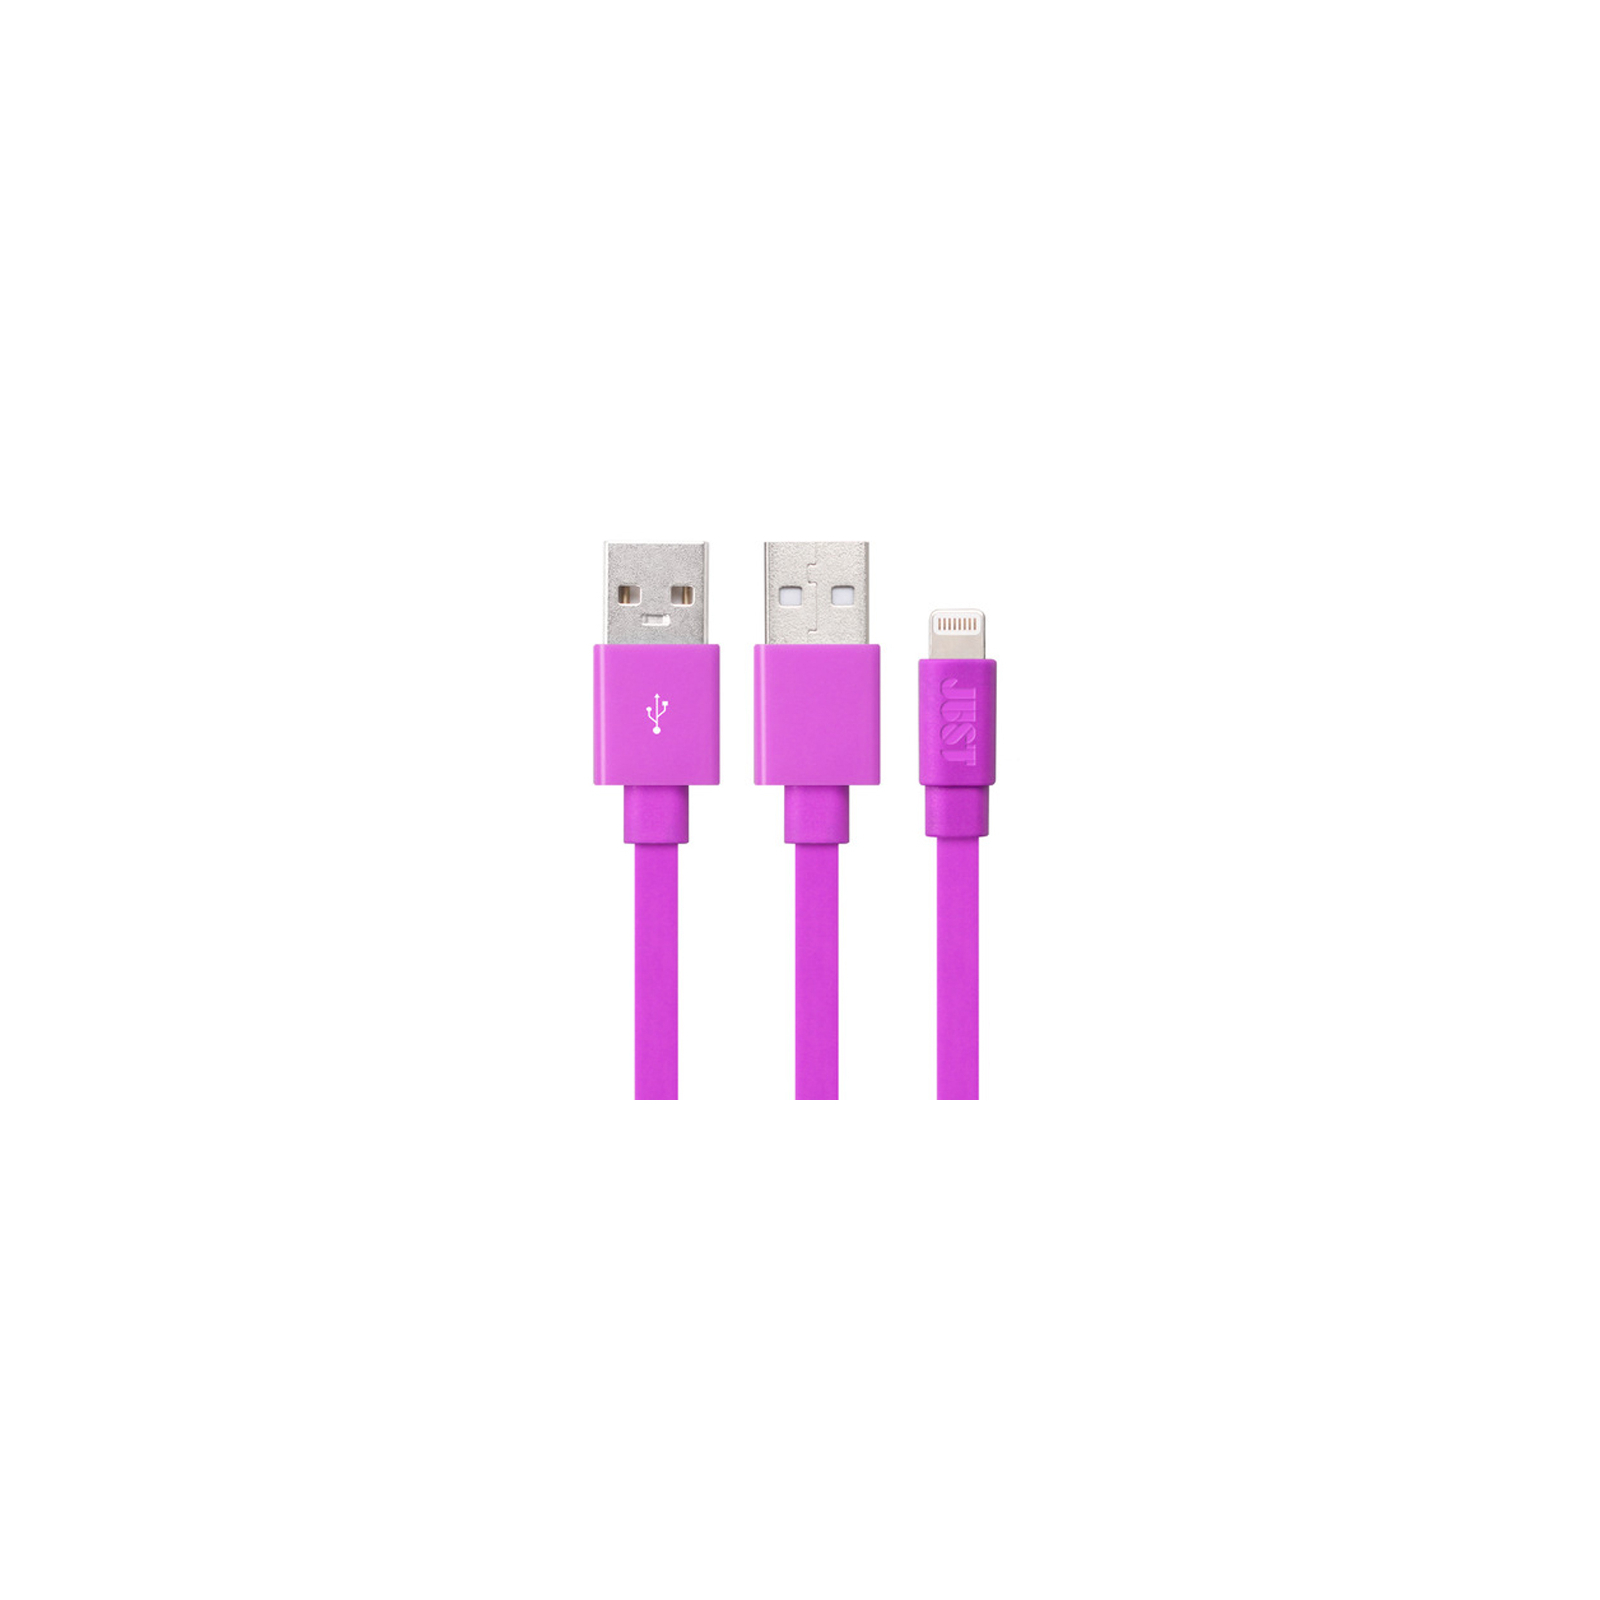 Дата кабель USB 2.0 AM to Lightning 1.2m Freedom Pink Just (LGTNG-FRDM-PNK)